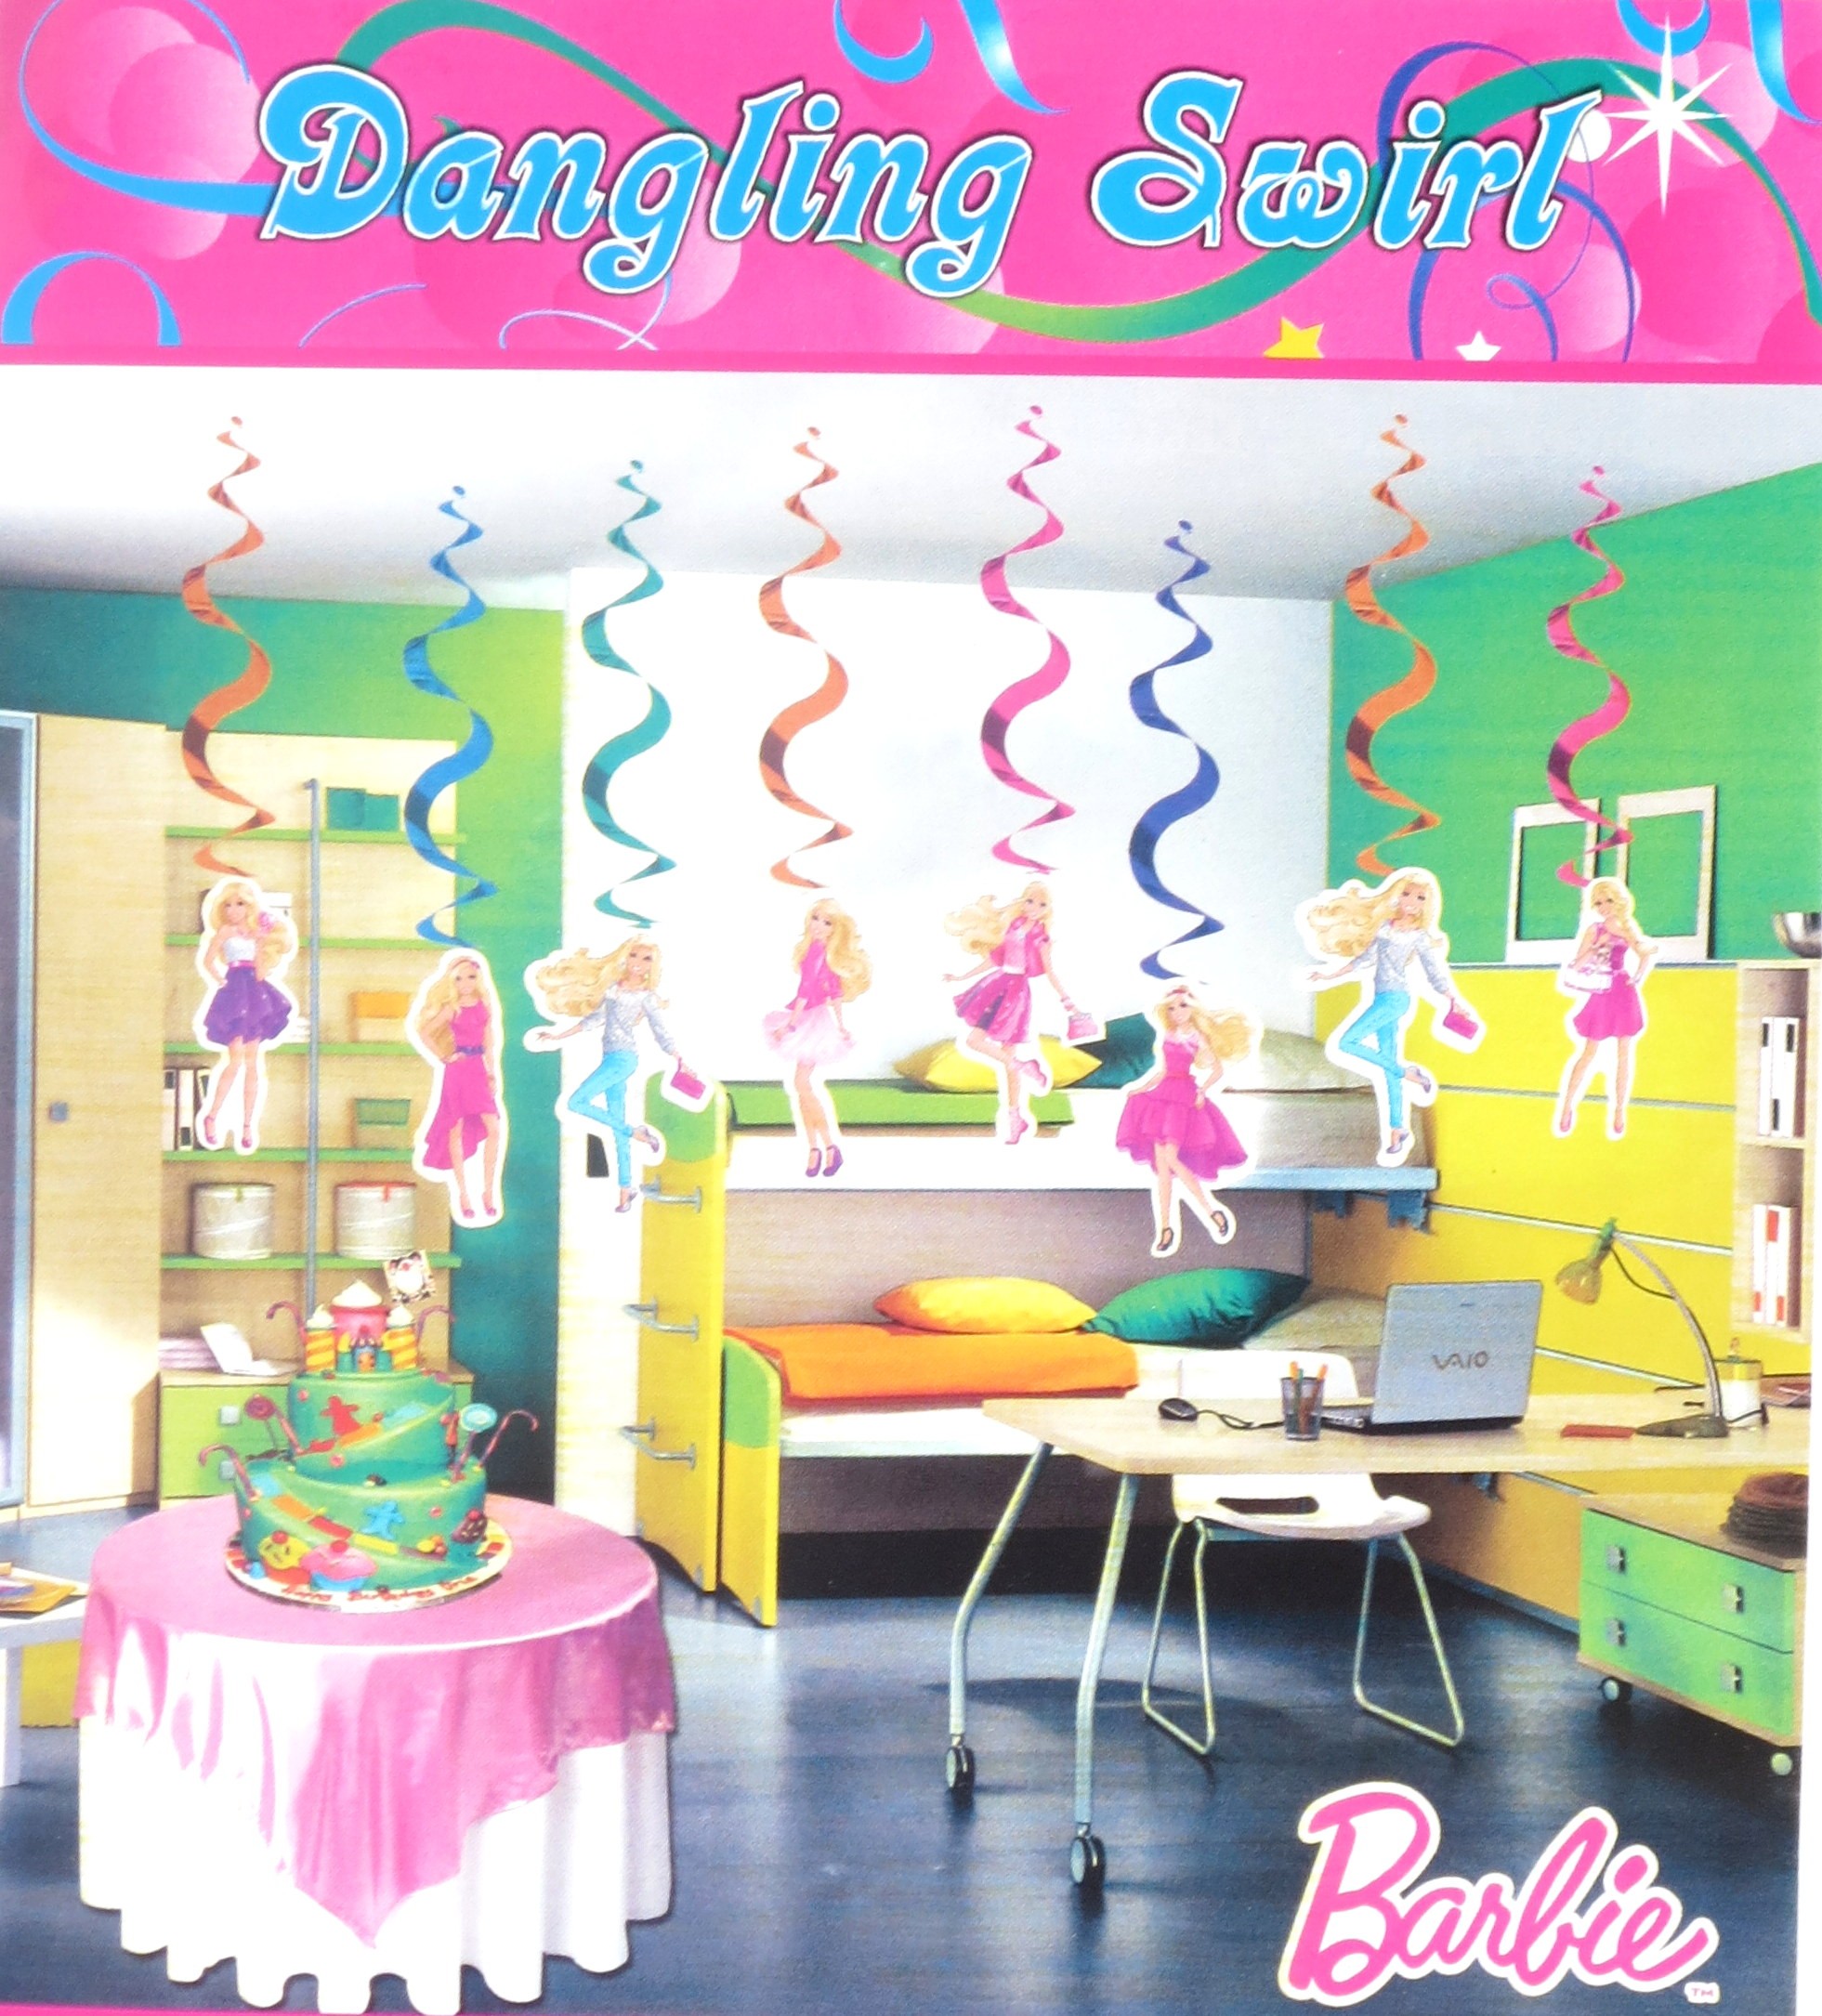 Dekoration Party Best Of Barbie theme Party Swirls Pack 3 Buy Barbie theme